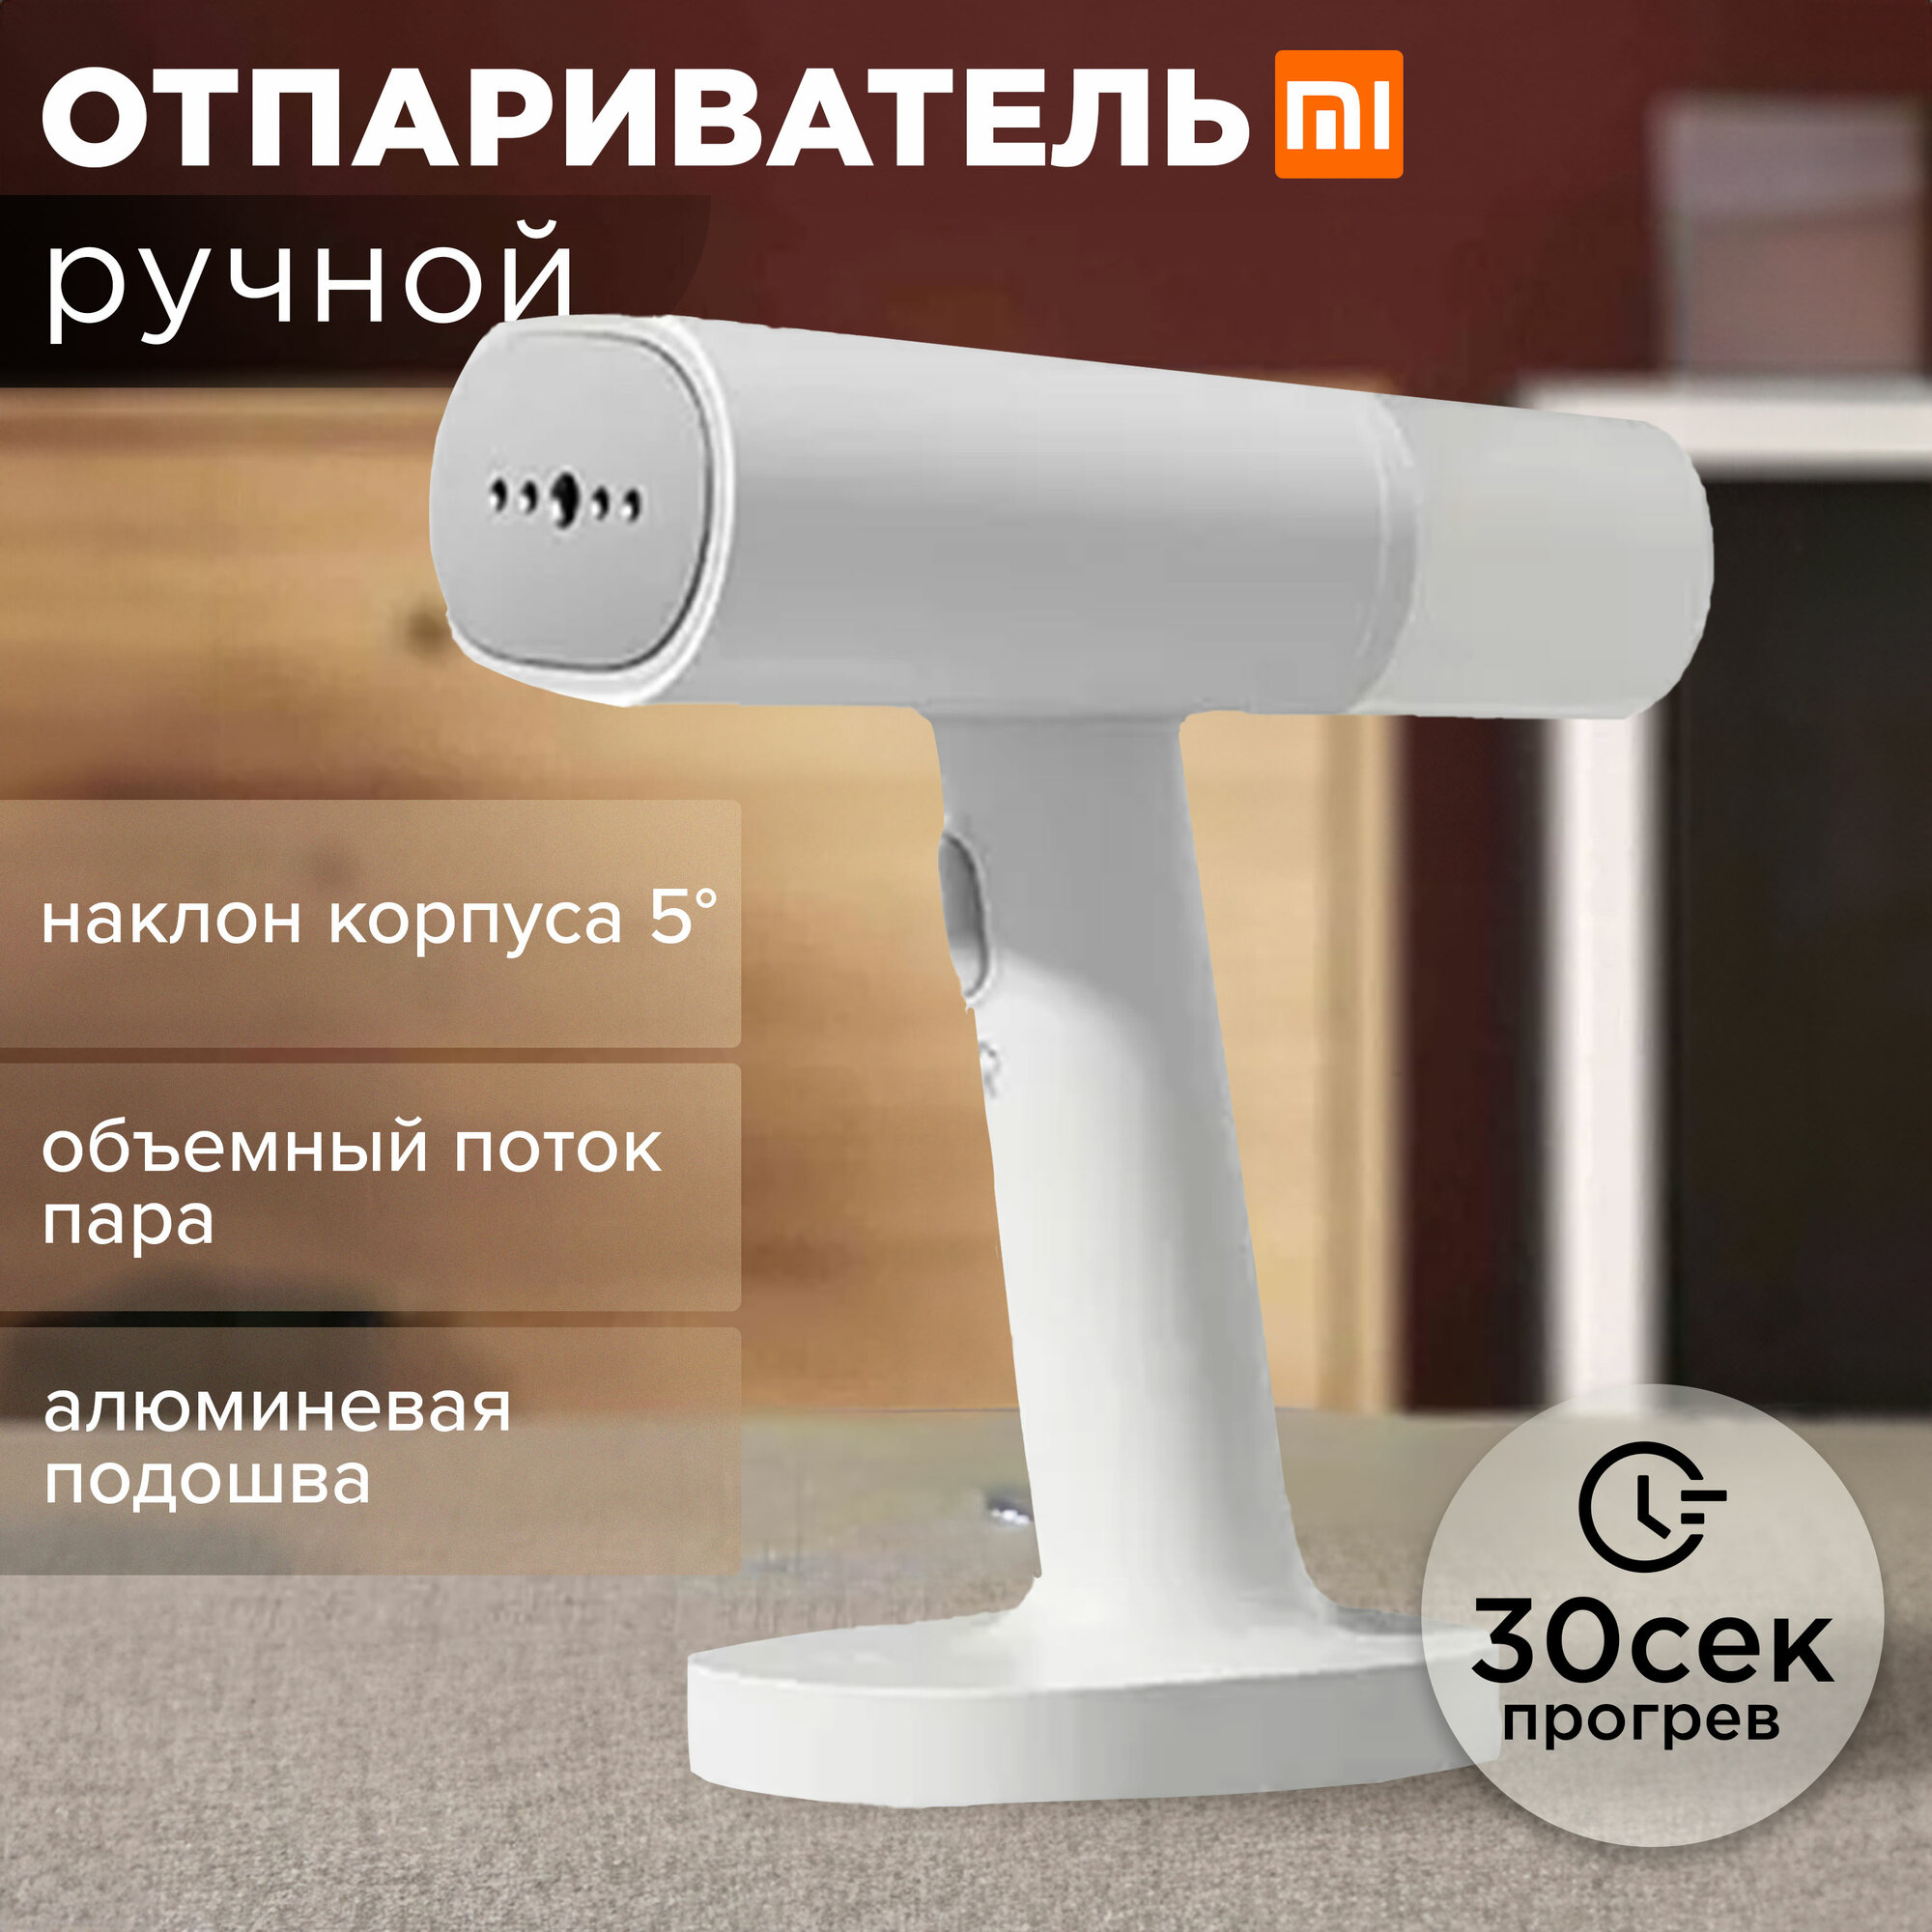 Отпариватель Xiaomi Mijia handheld ironing machine MJGTJ01LF